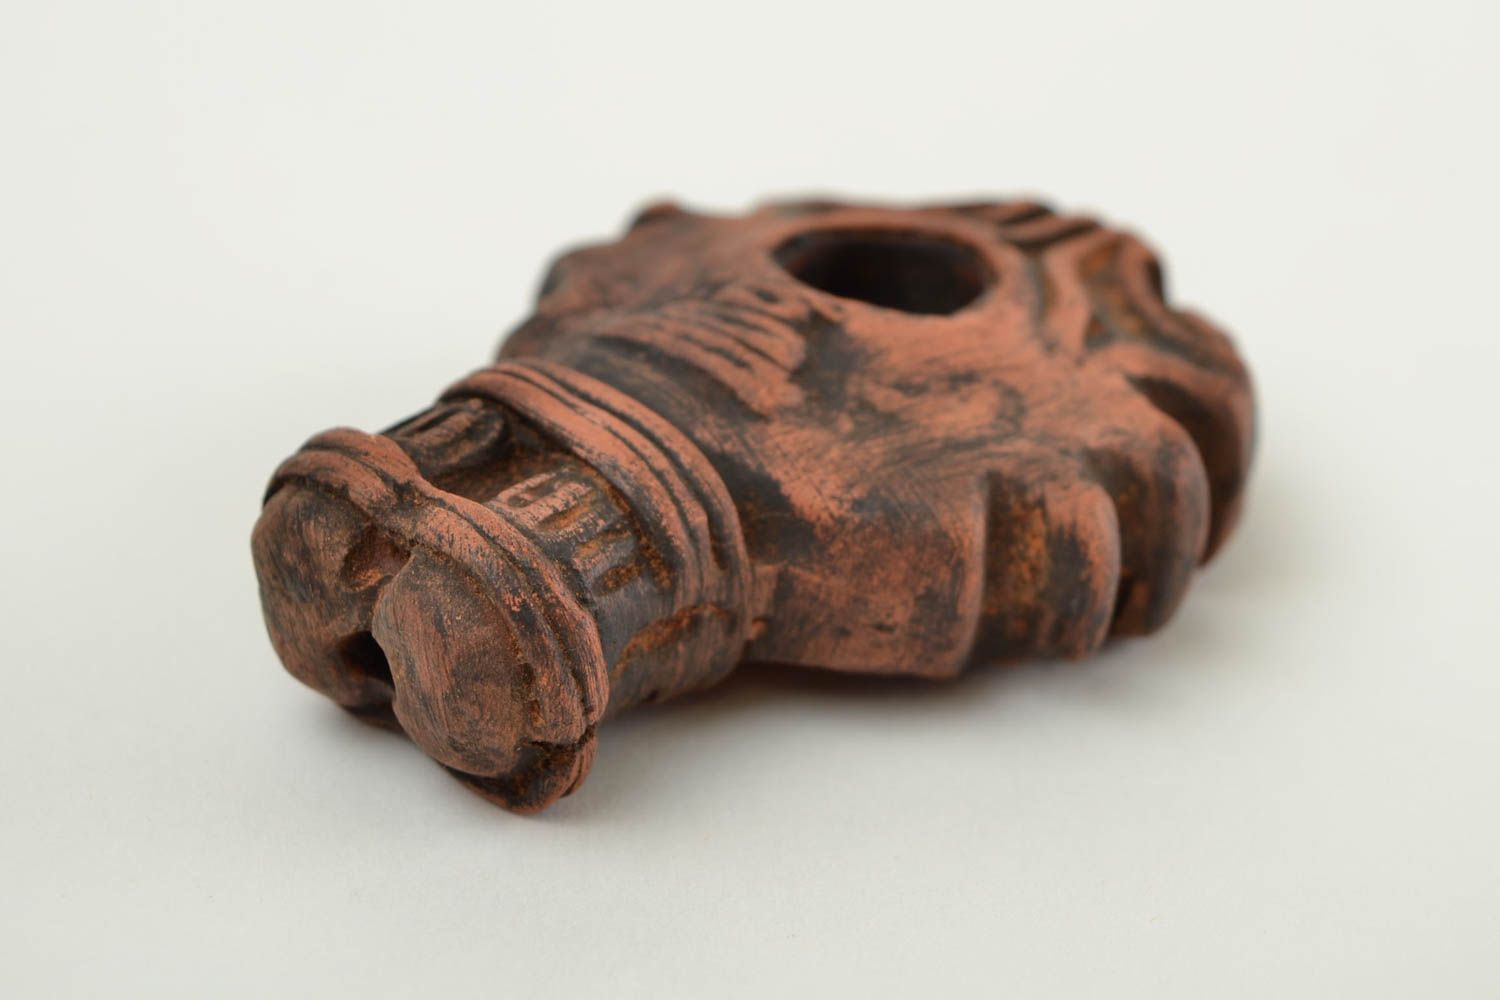 Handmade ceramic tobacco pipe smoking pipe sculpture art pottery works photo 1